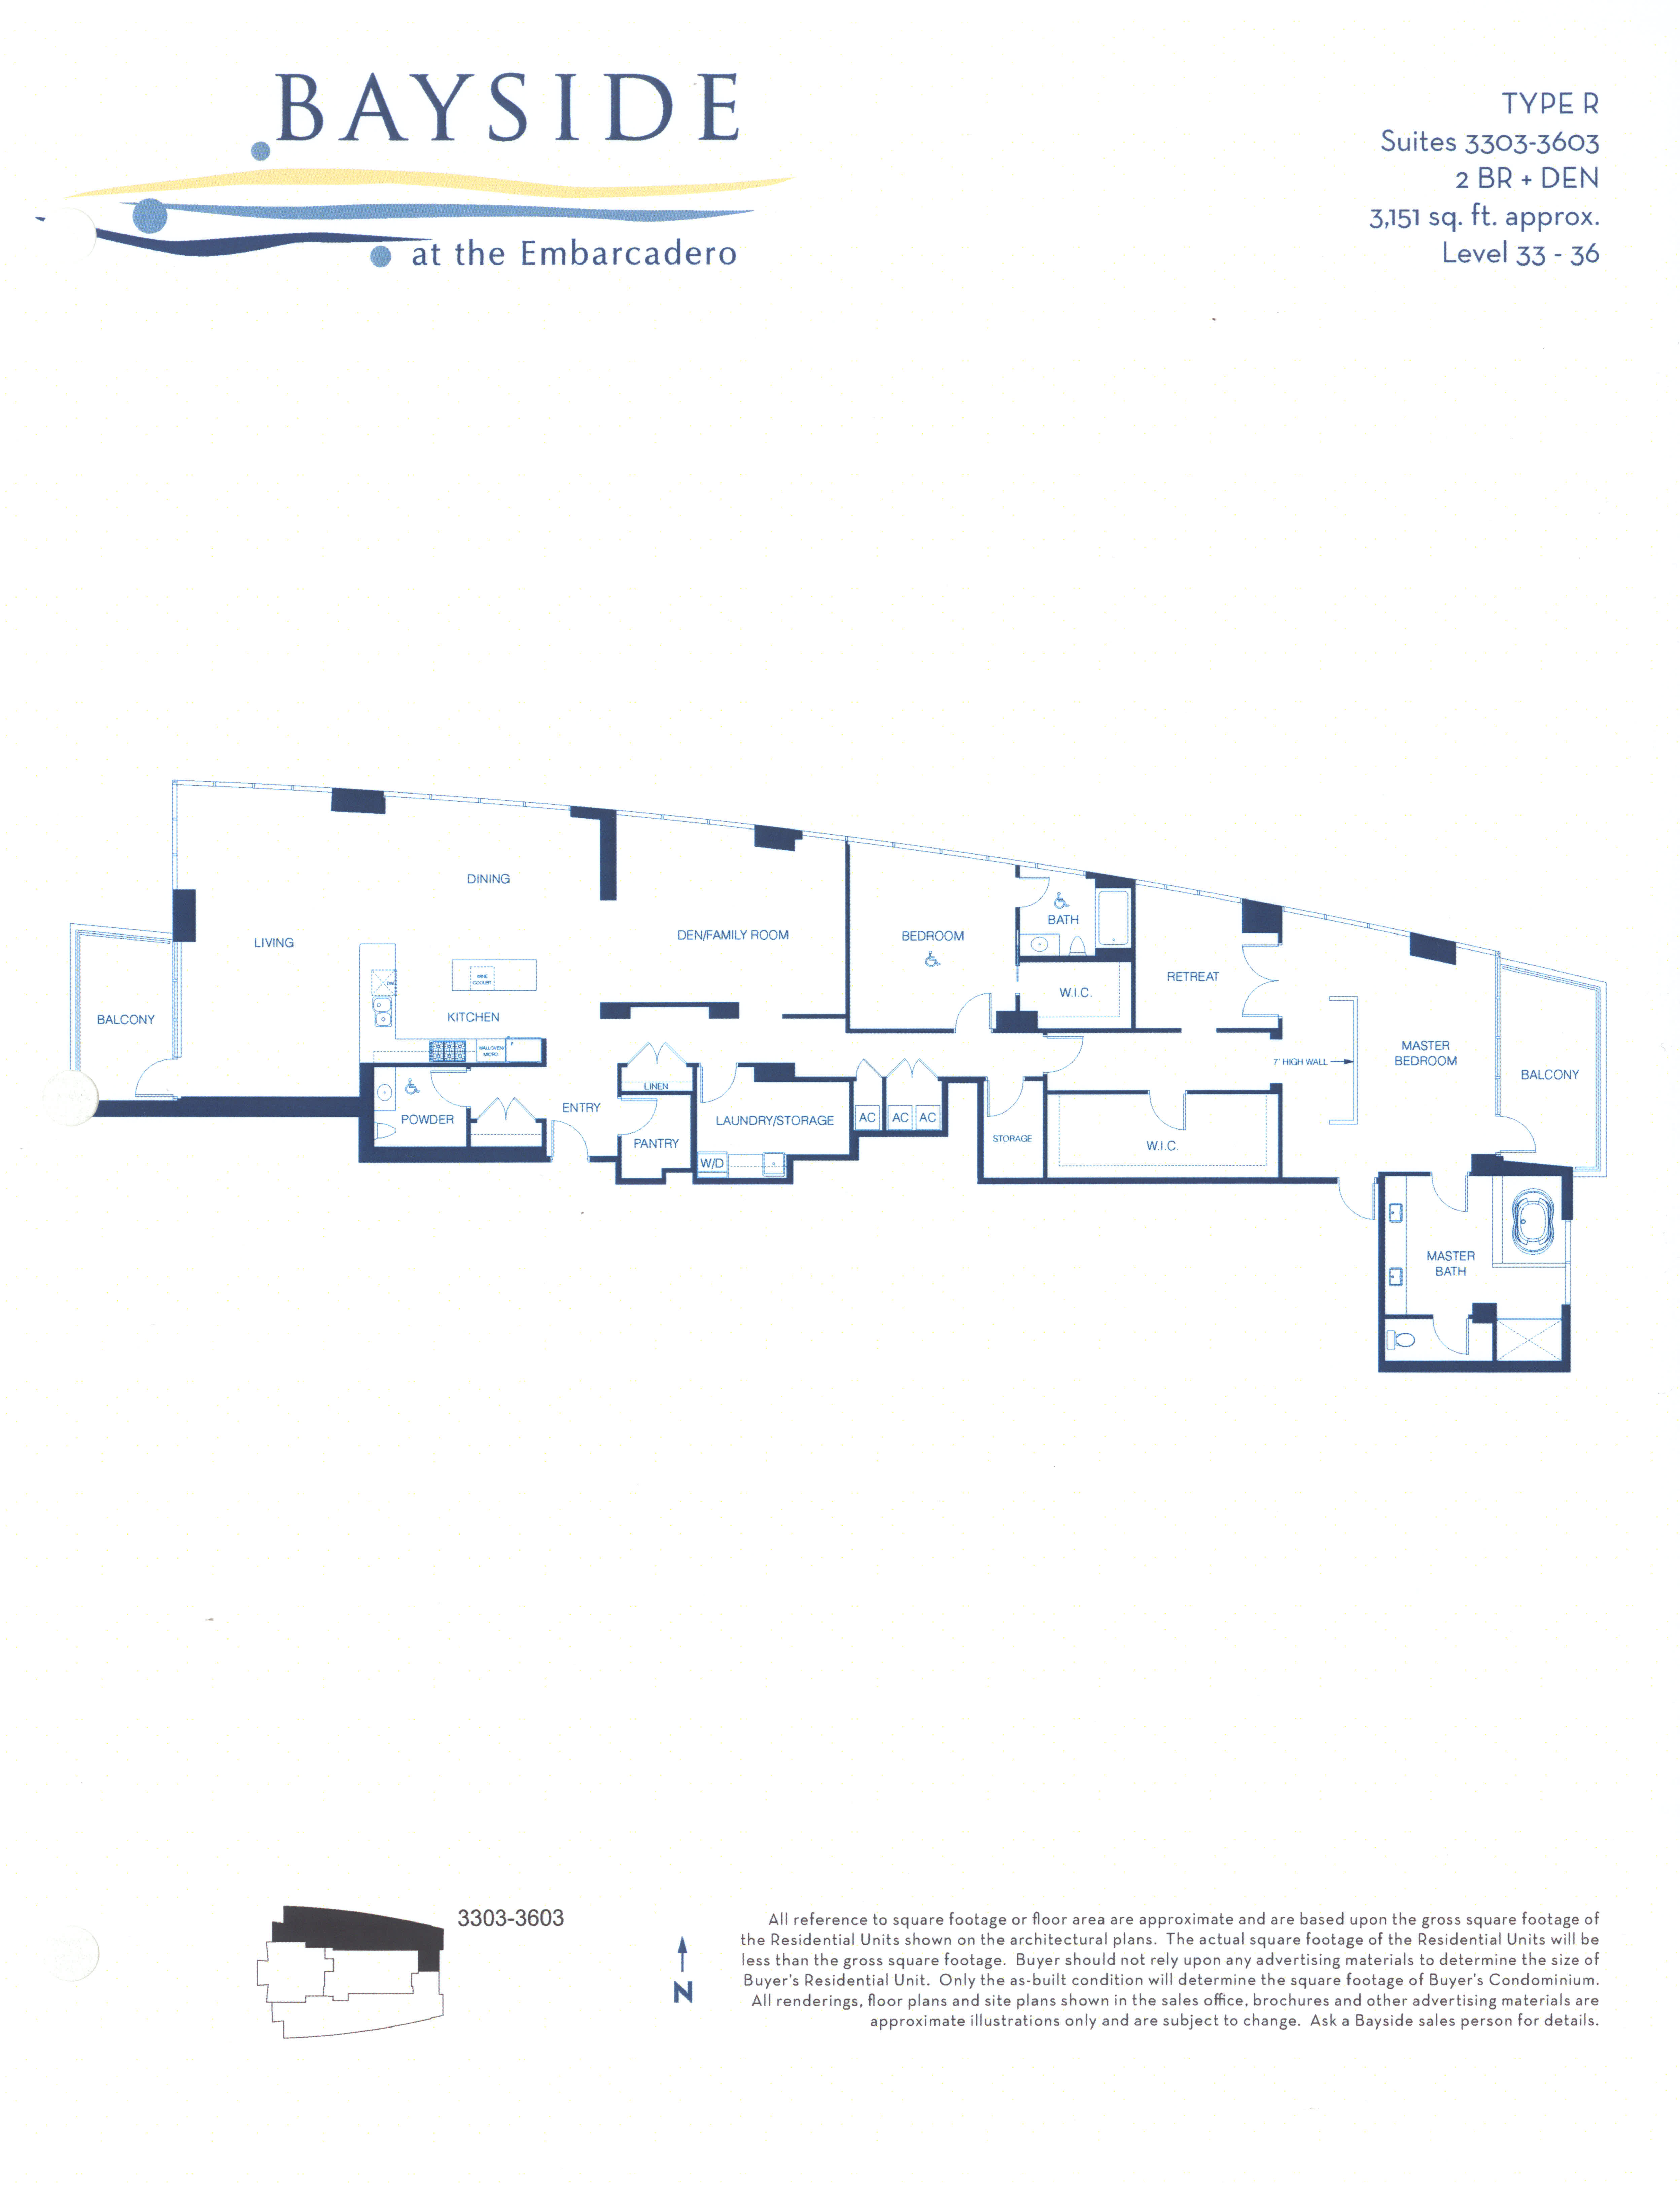 Bayside Floor Plan Level 33- 36 Type R